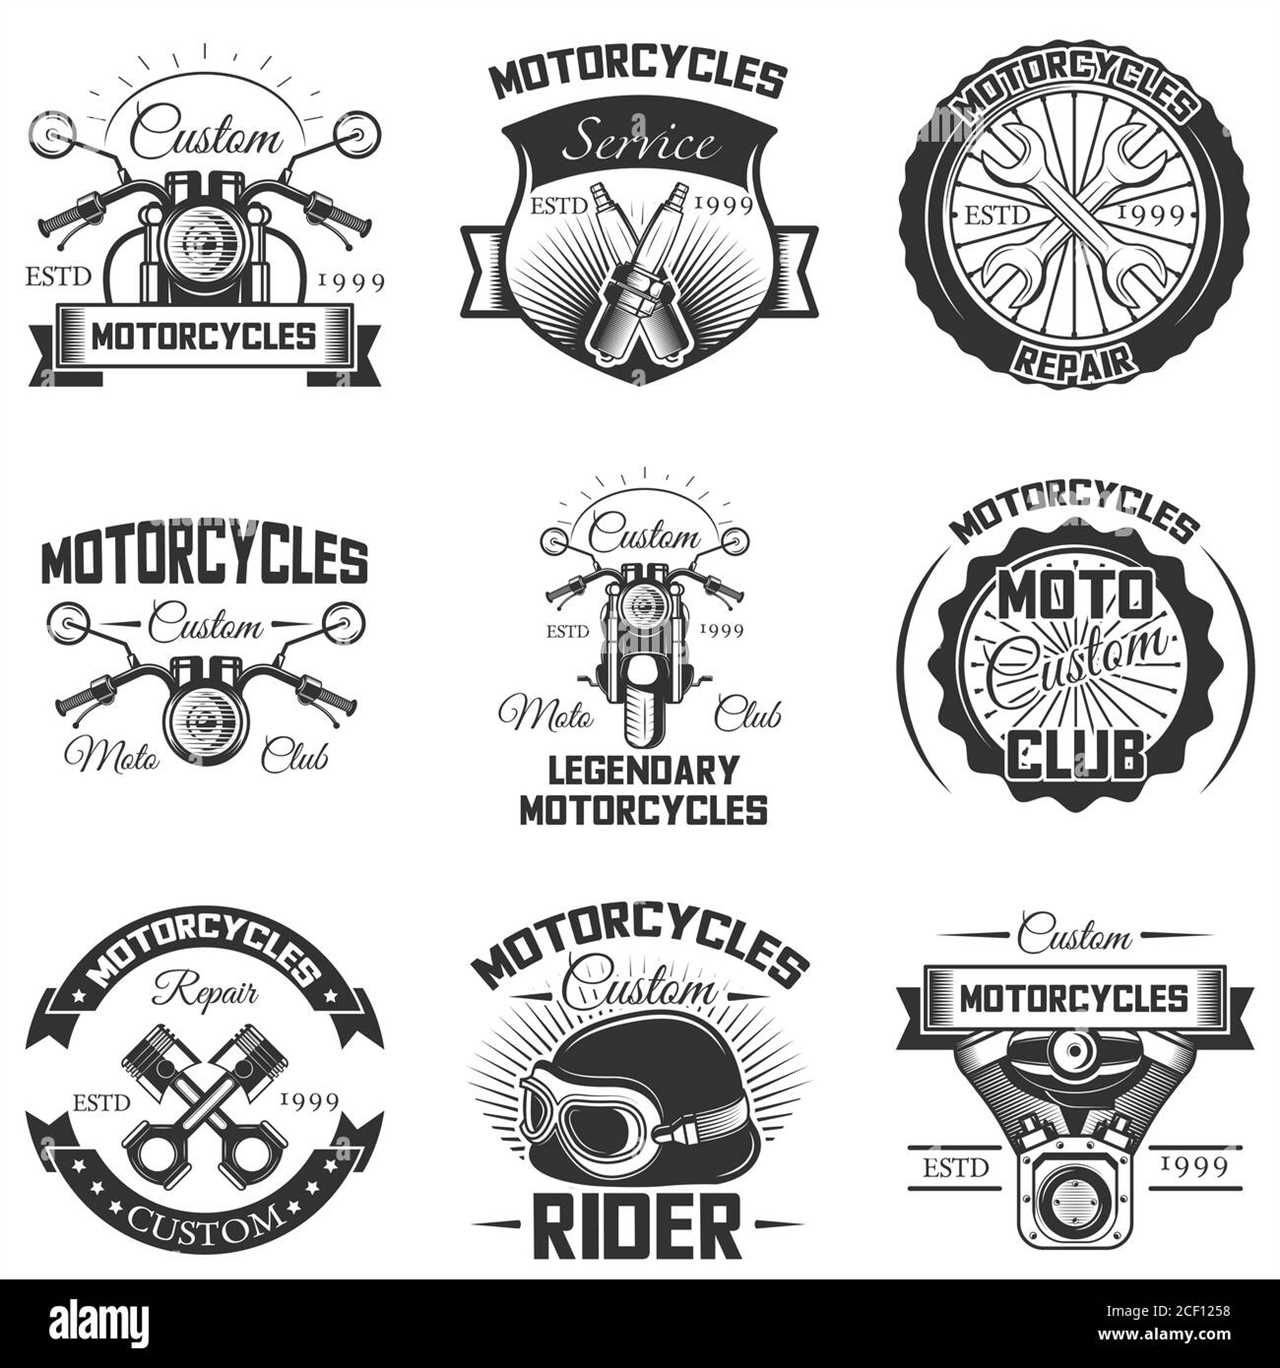 The Symbolism Behind Motorcycle Logos